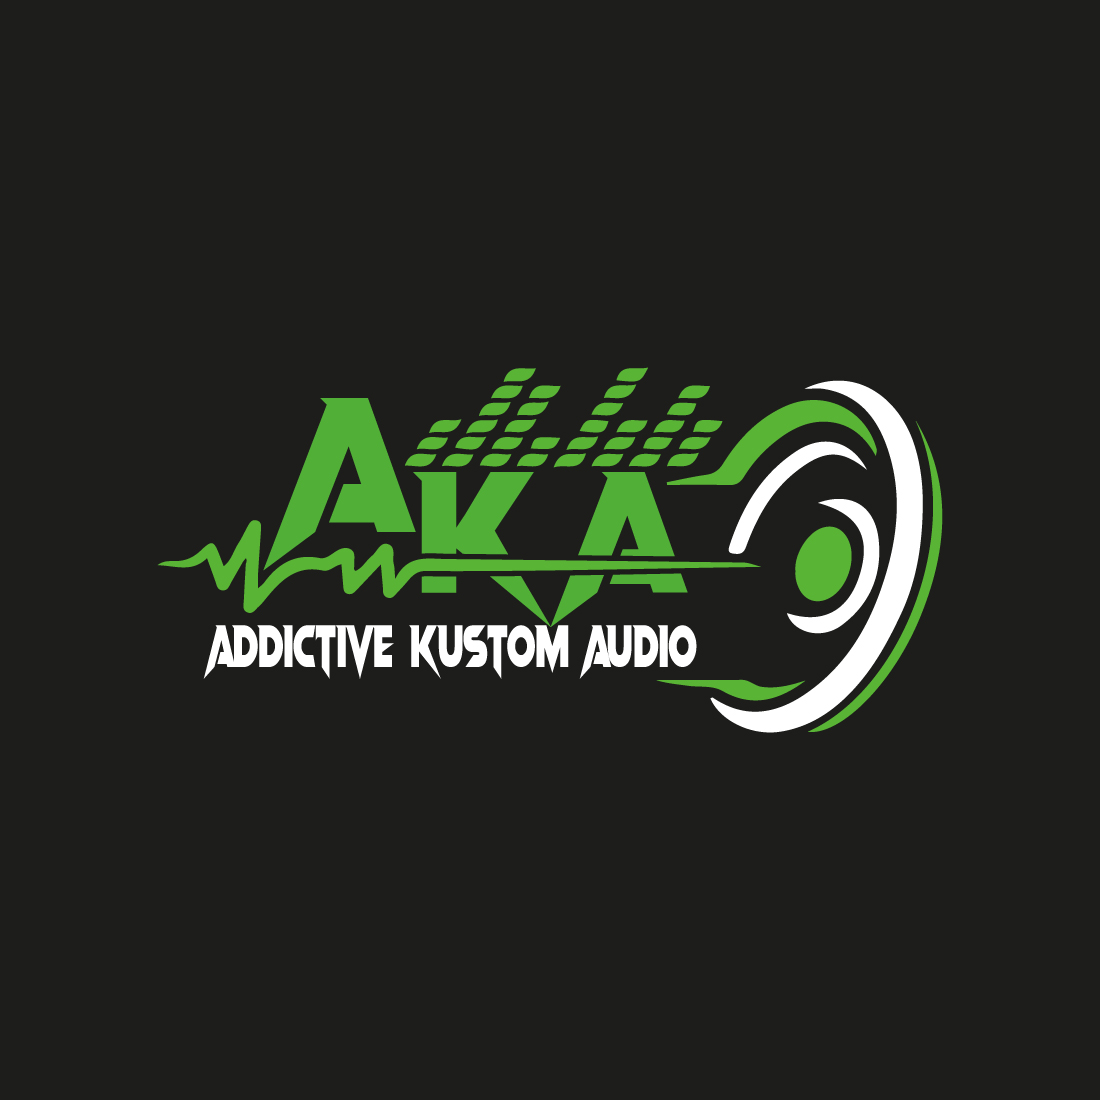 Car audio logo preview image.